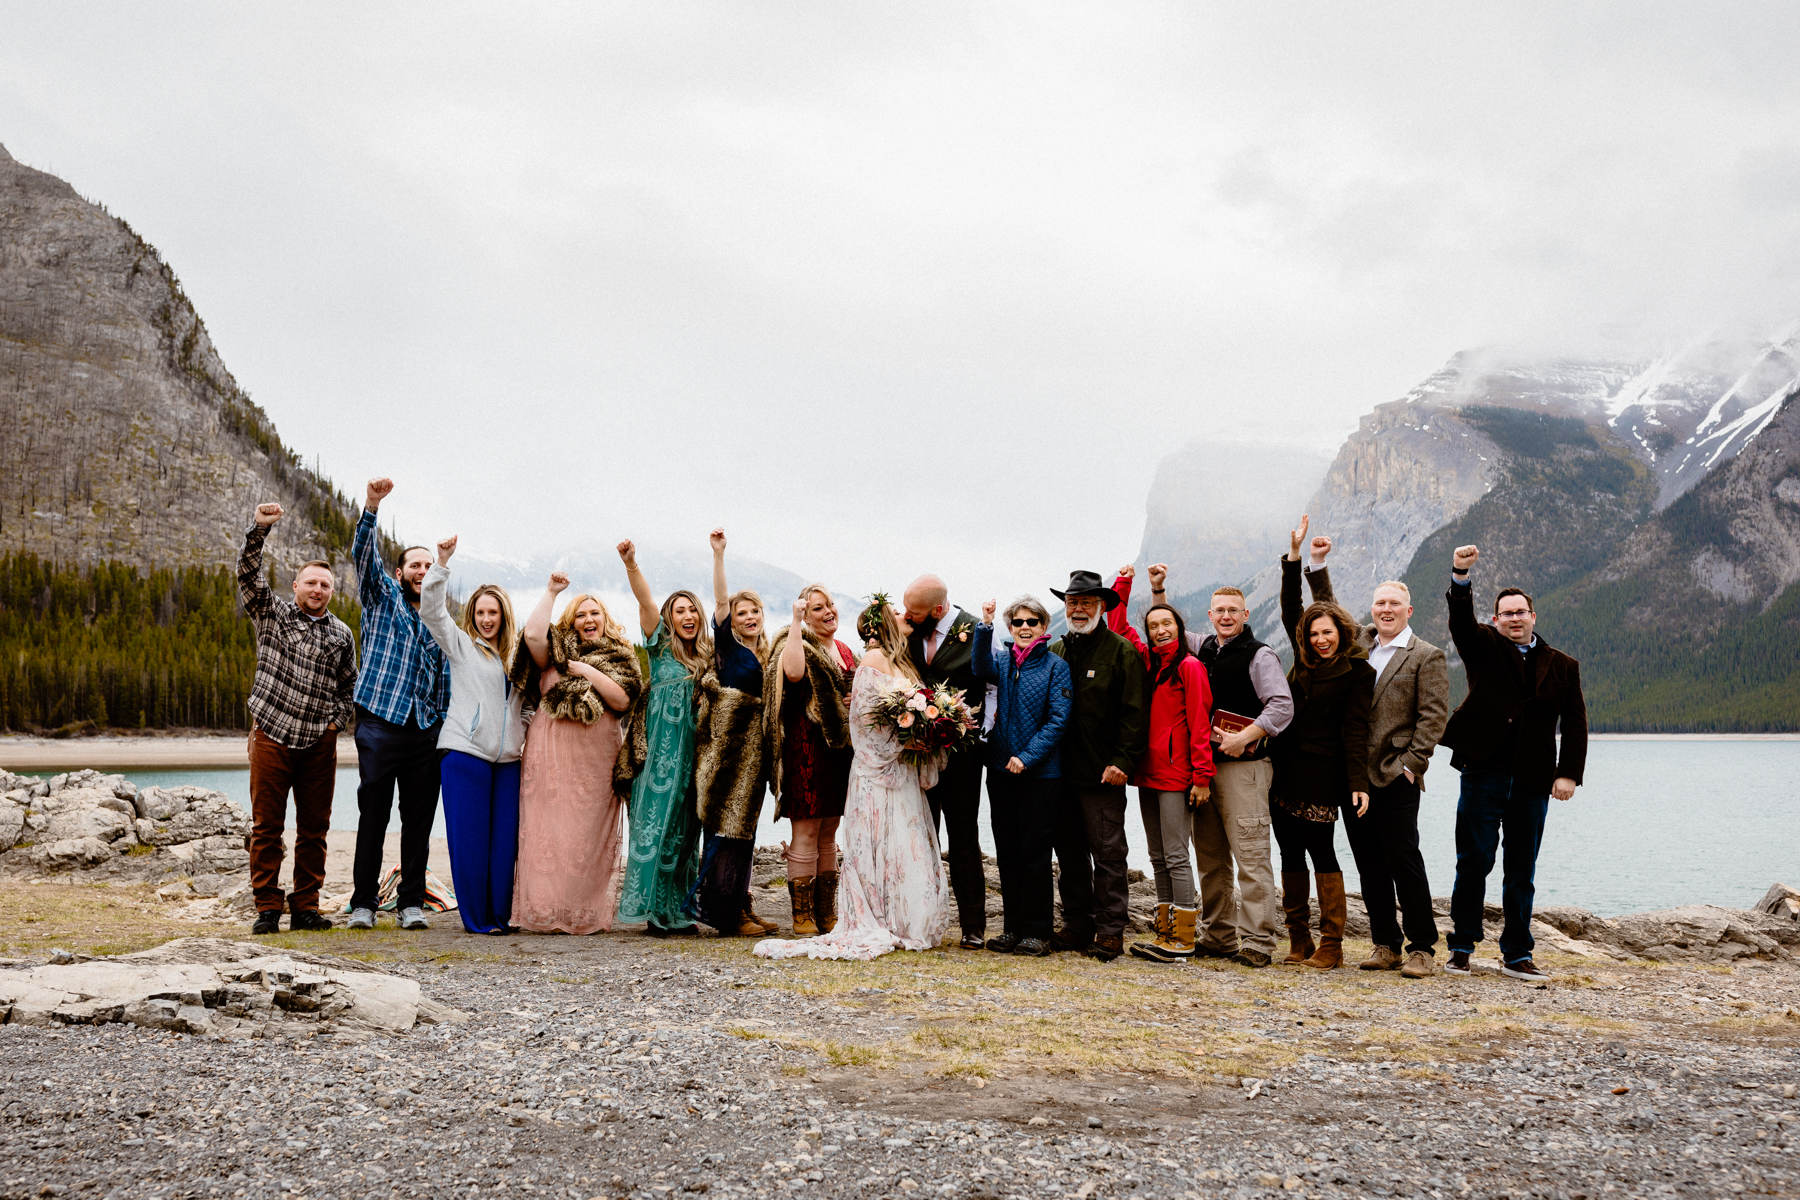 Stormy and Rainy Banff Wedding Photography - Photo 21